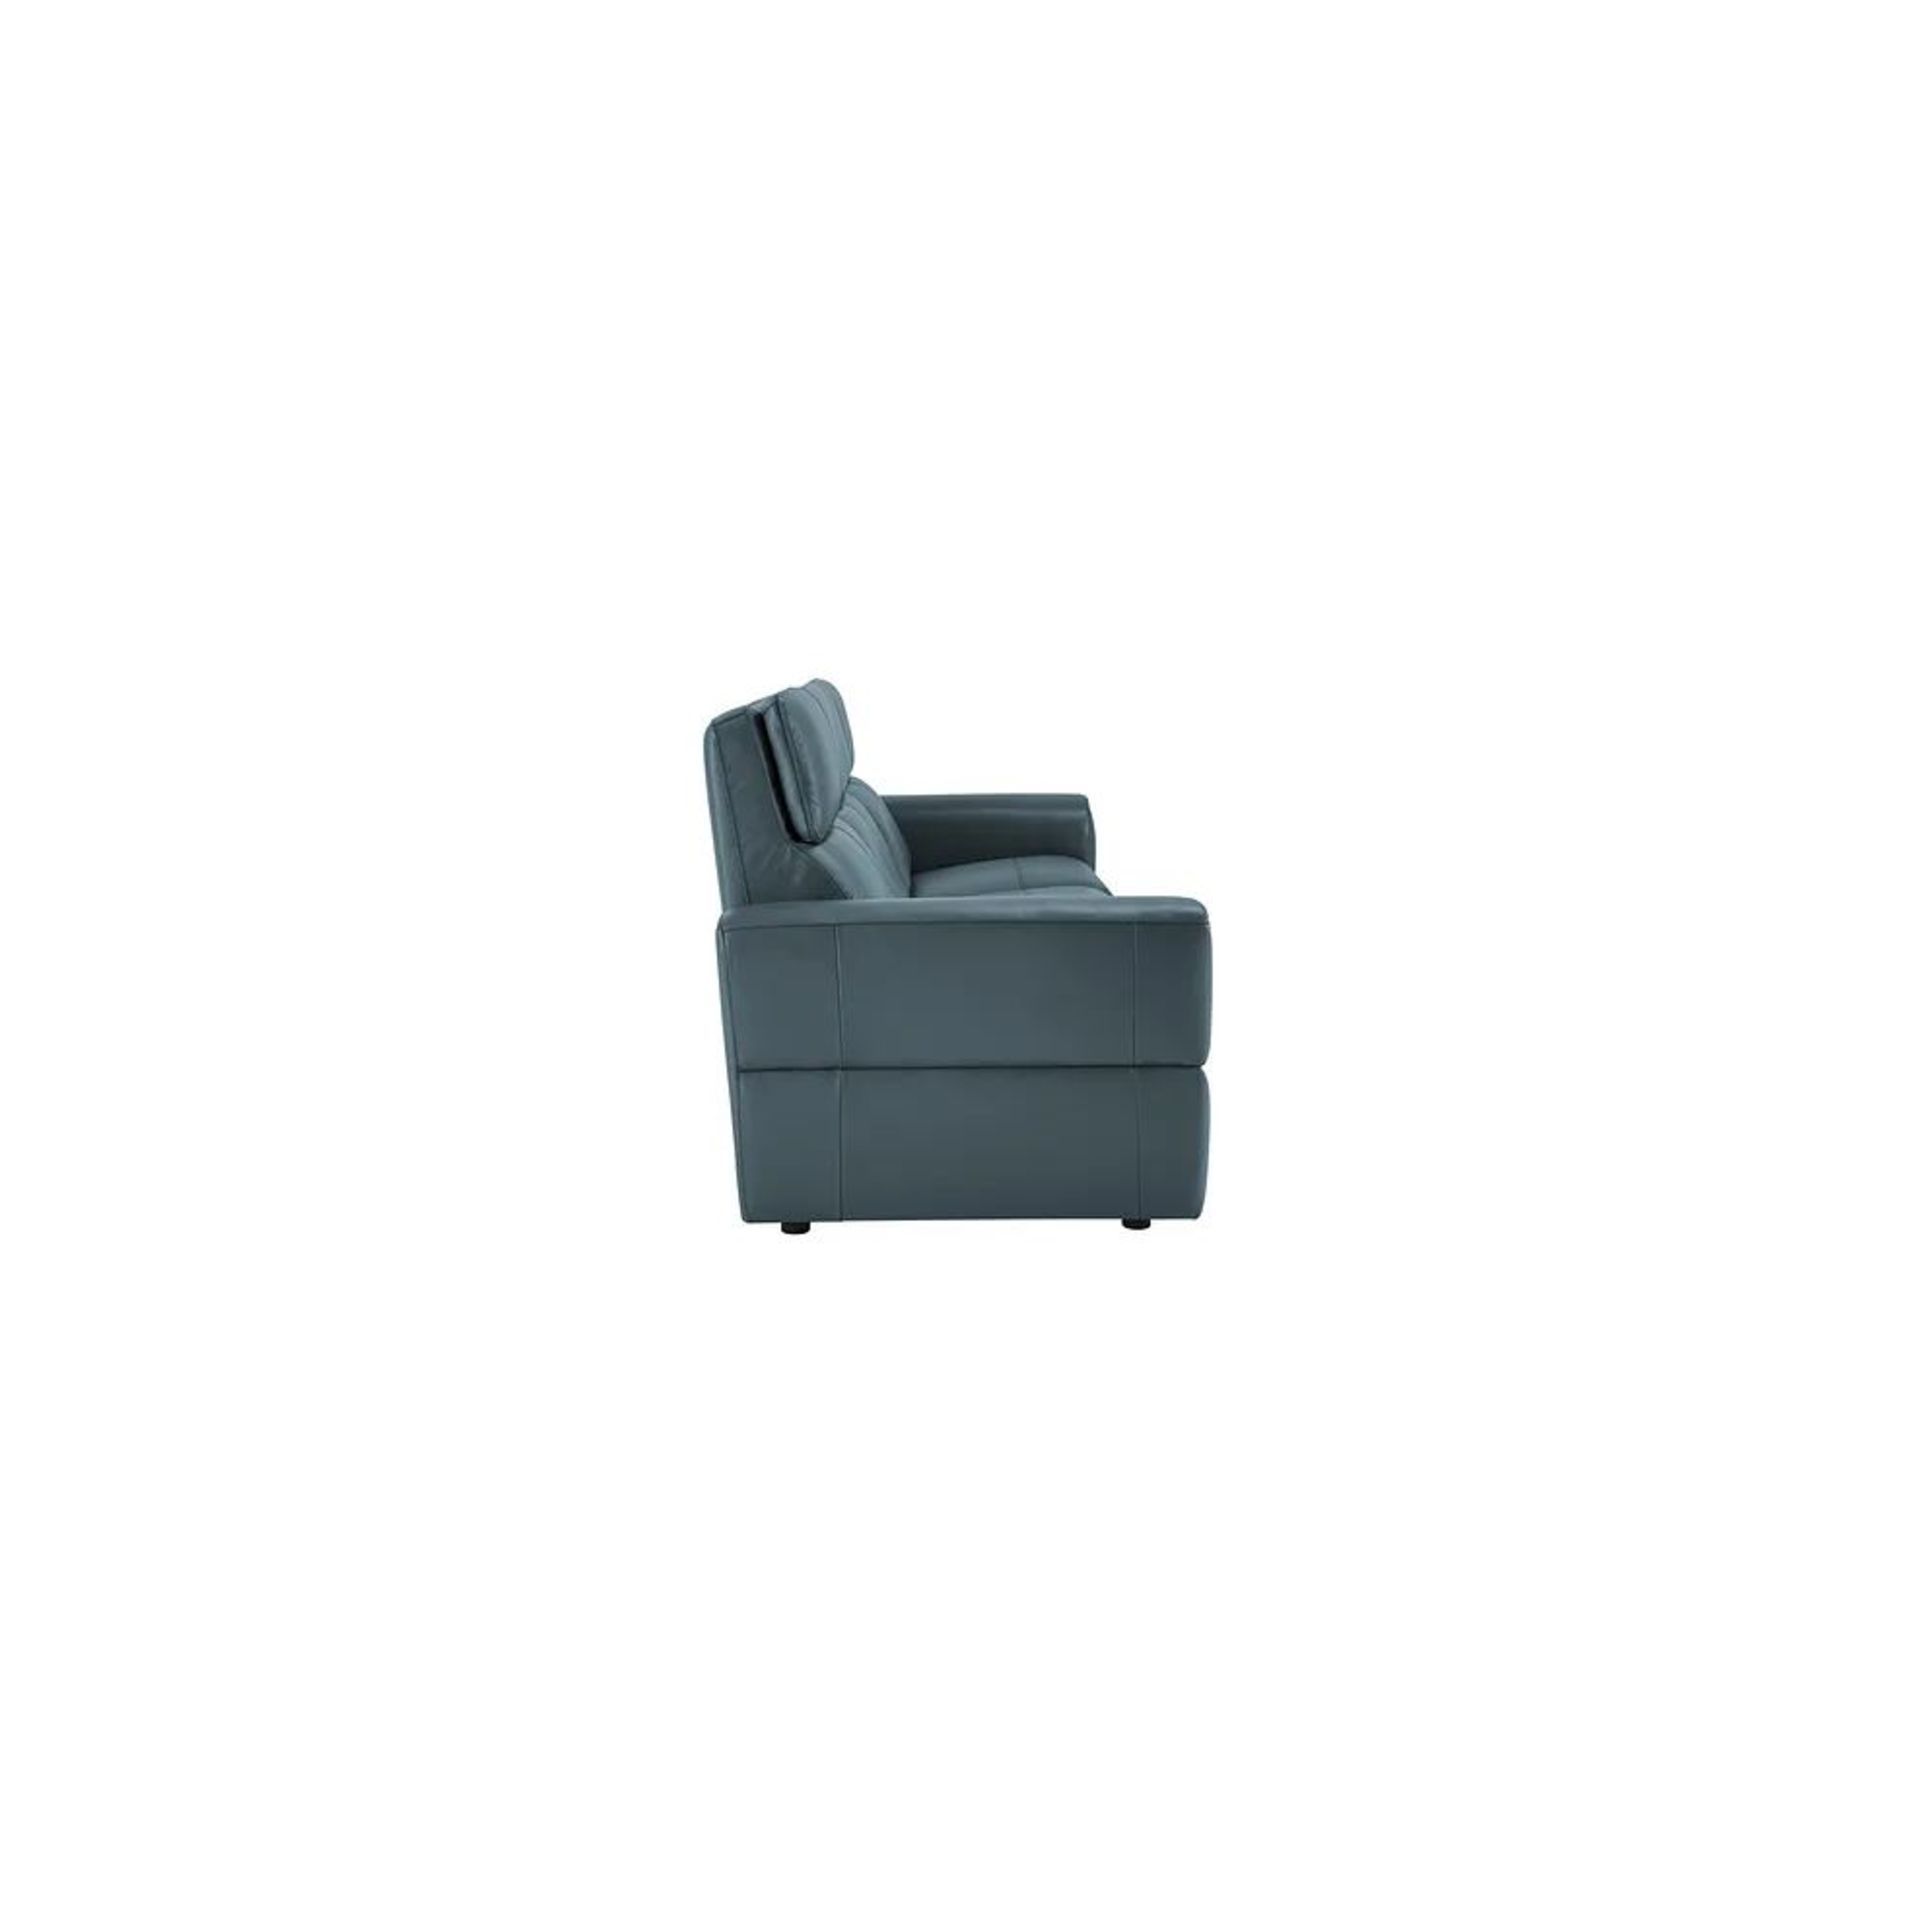 BRAND NEW SAMSON Modular 3 Seat Static Sofa -LIGHT BLUE LEATHER. RRP £1750. Showcasing neat, - Image 2 of 5